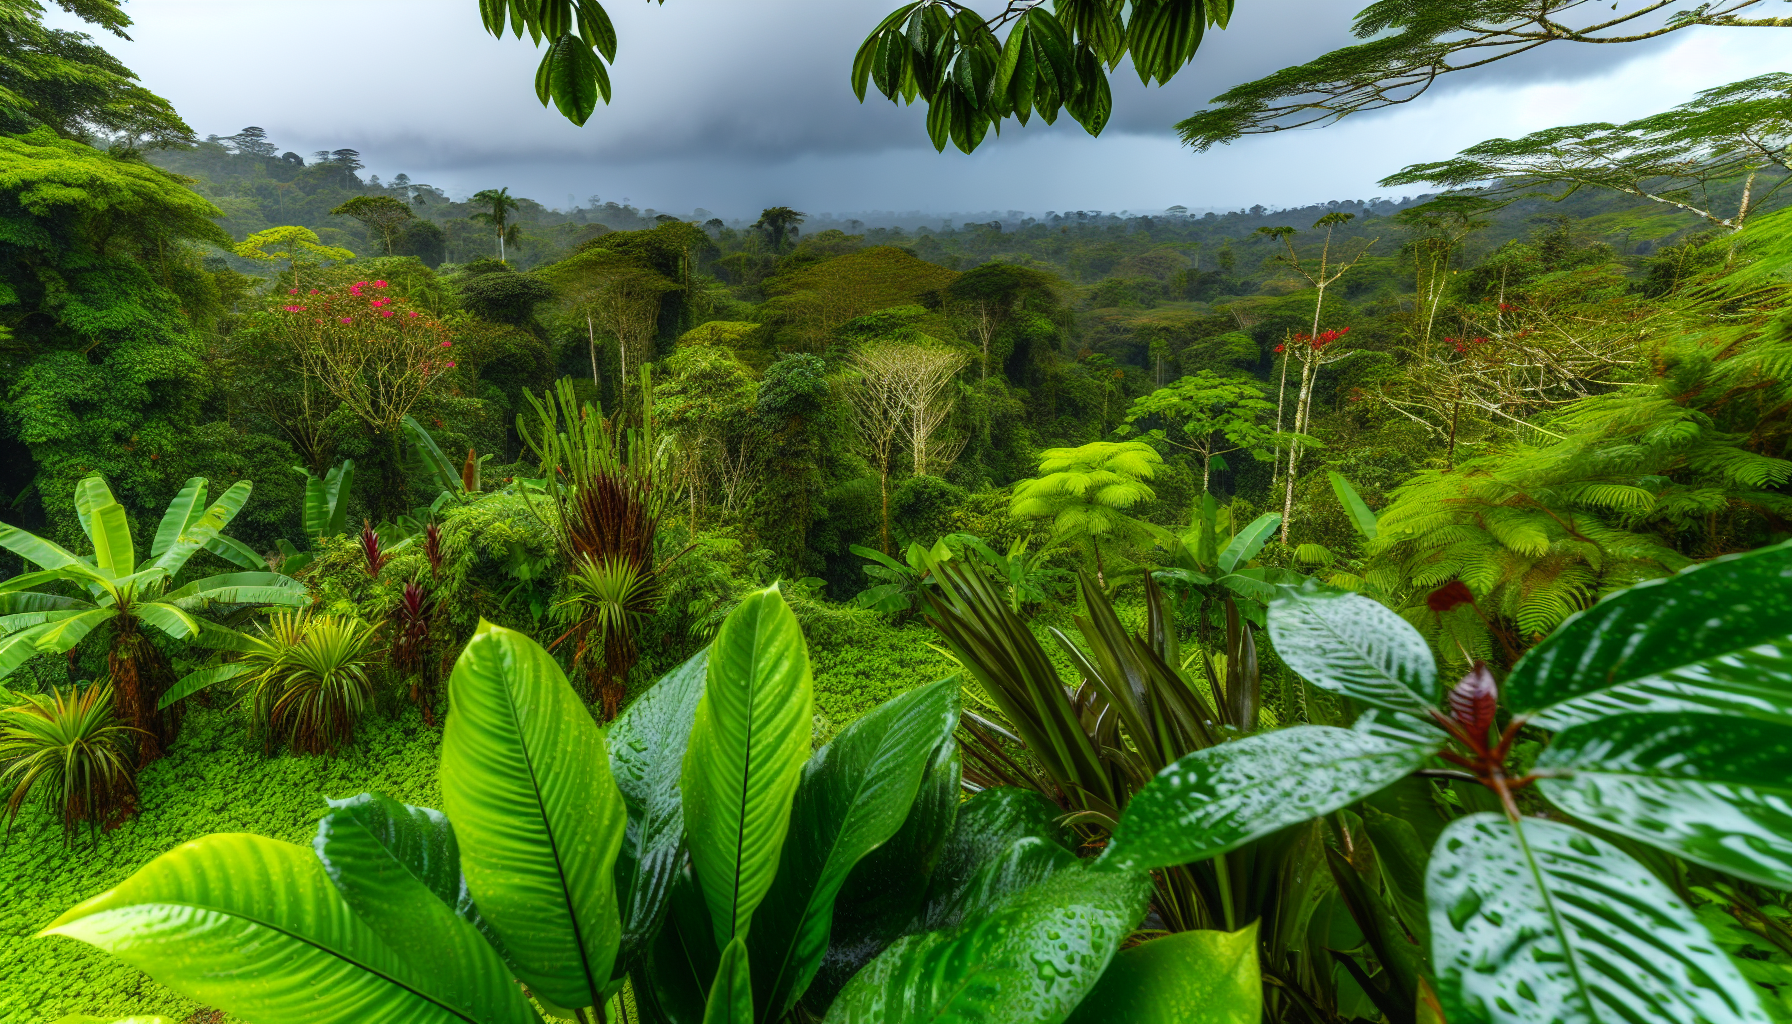 Lush green landscape during Costa Rica's rainy season